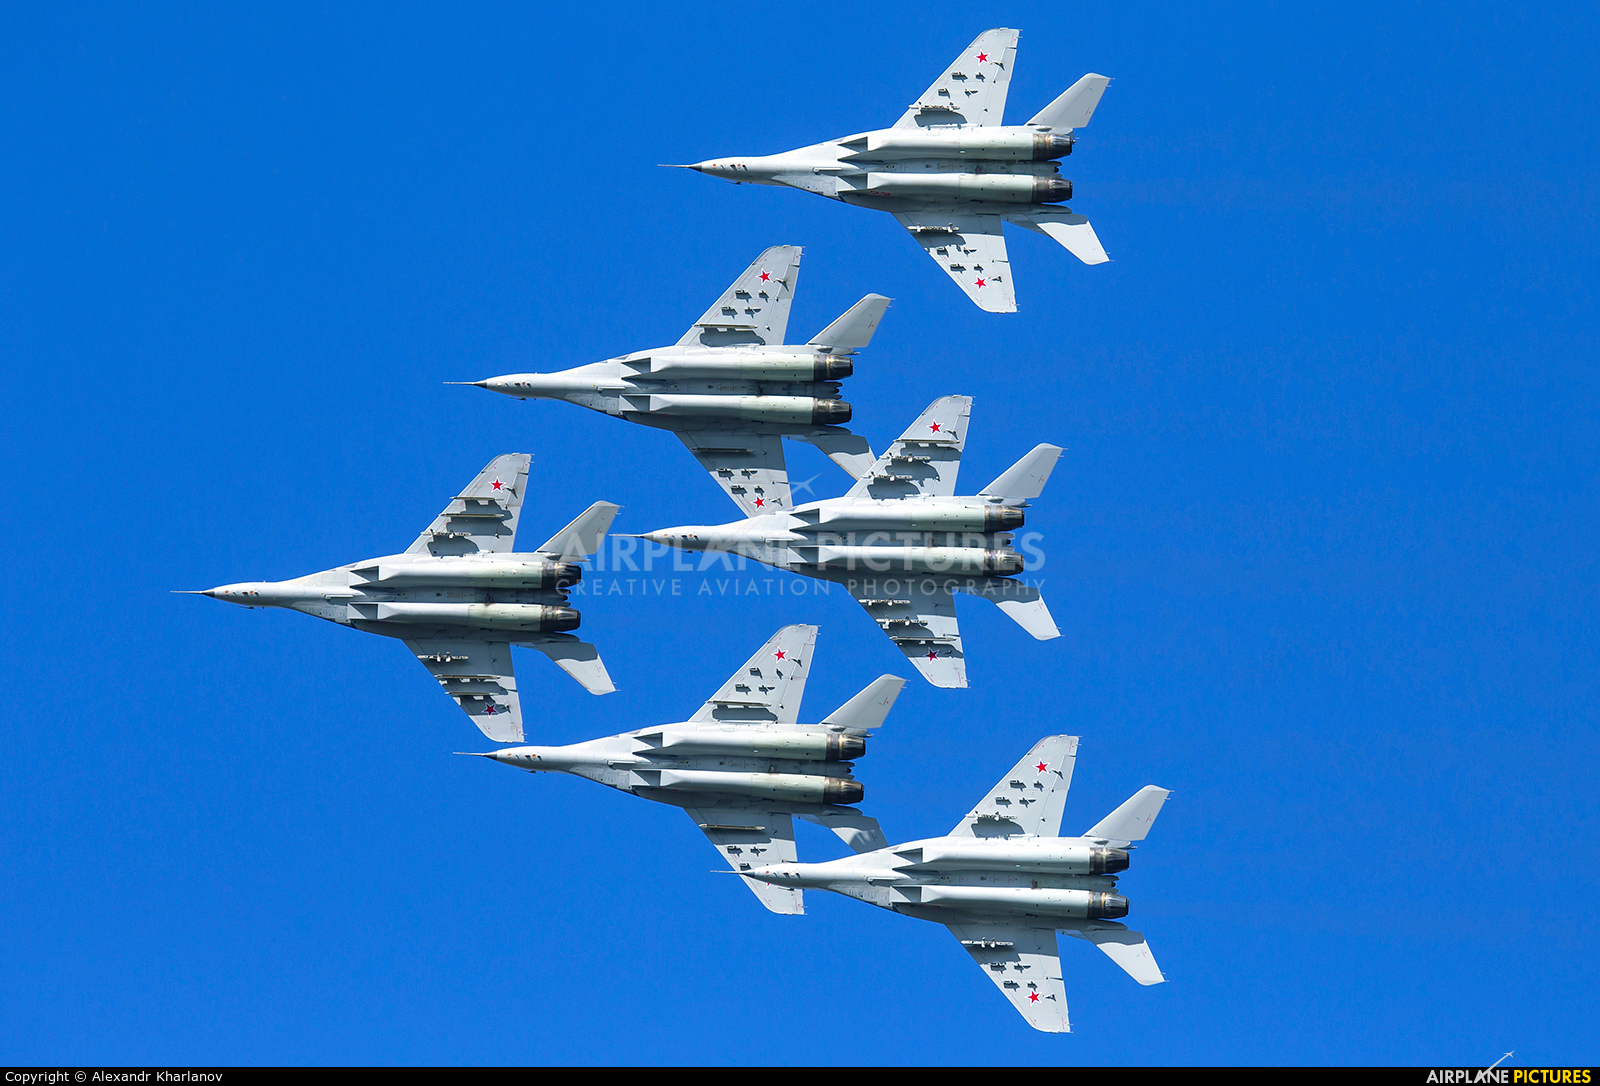 Russia - Air Force "Strizhi" - aircraft at Krasnodar Tsentralny